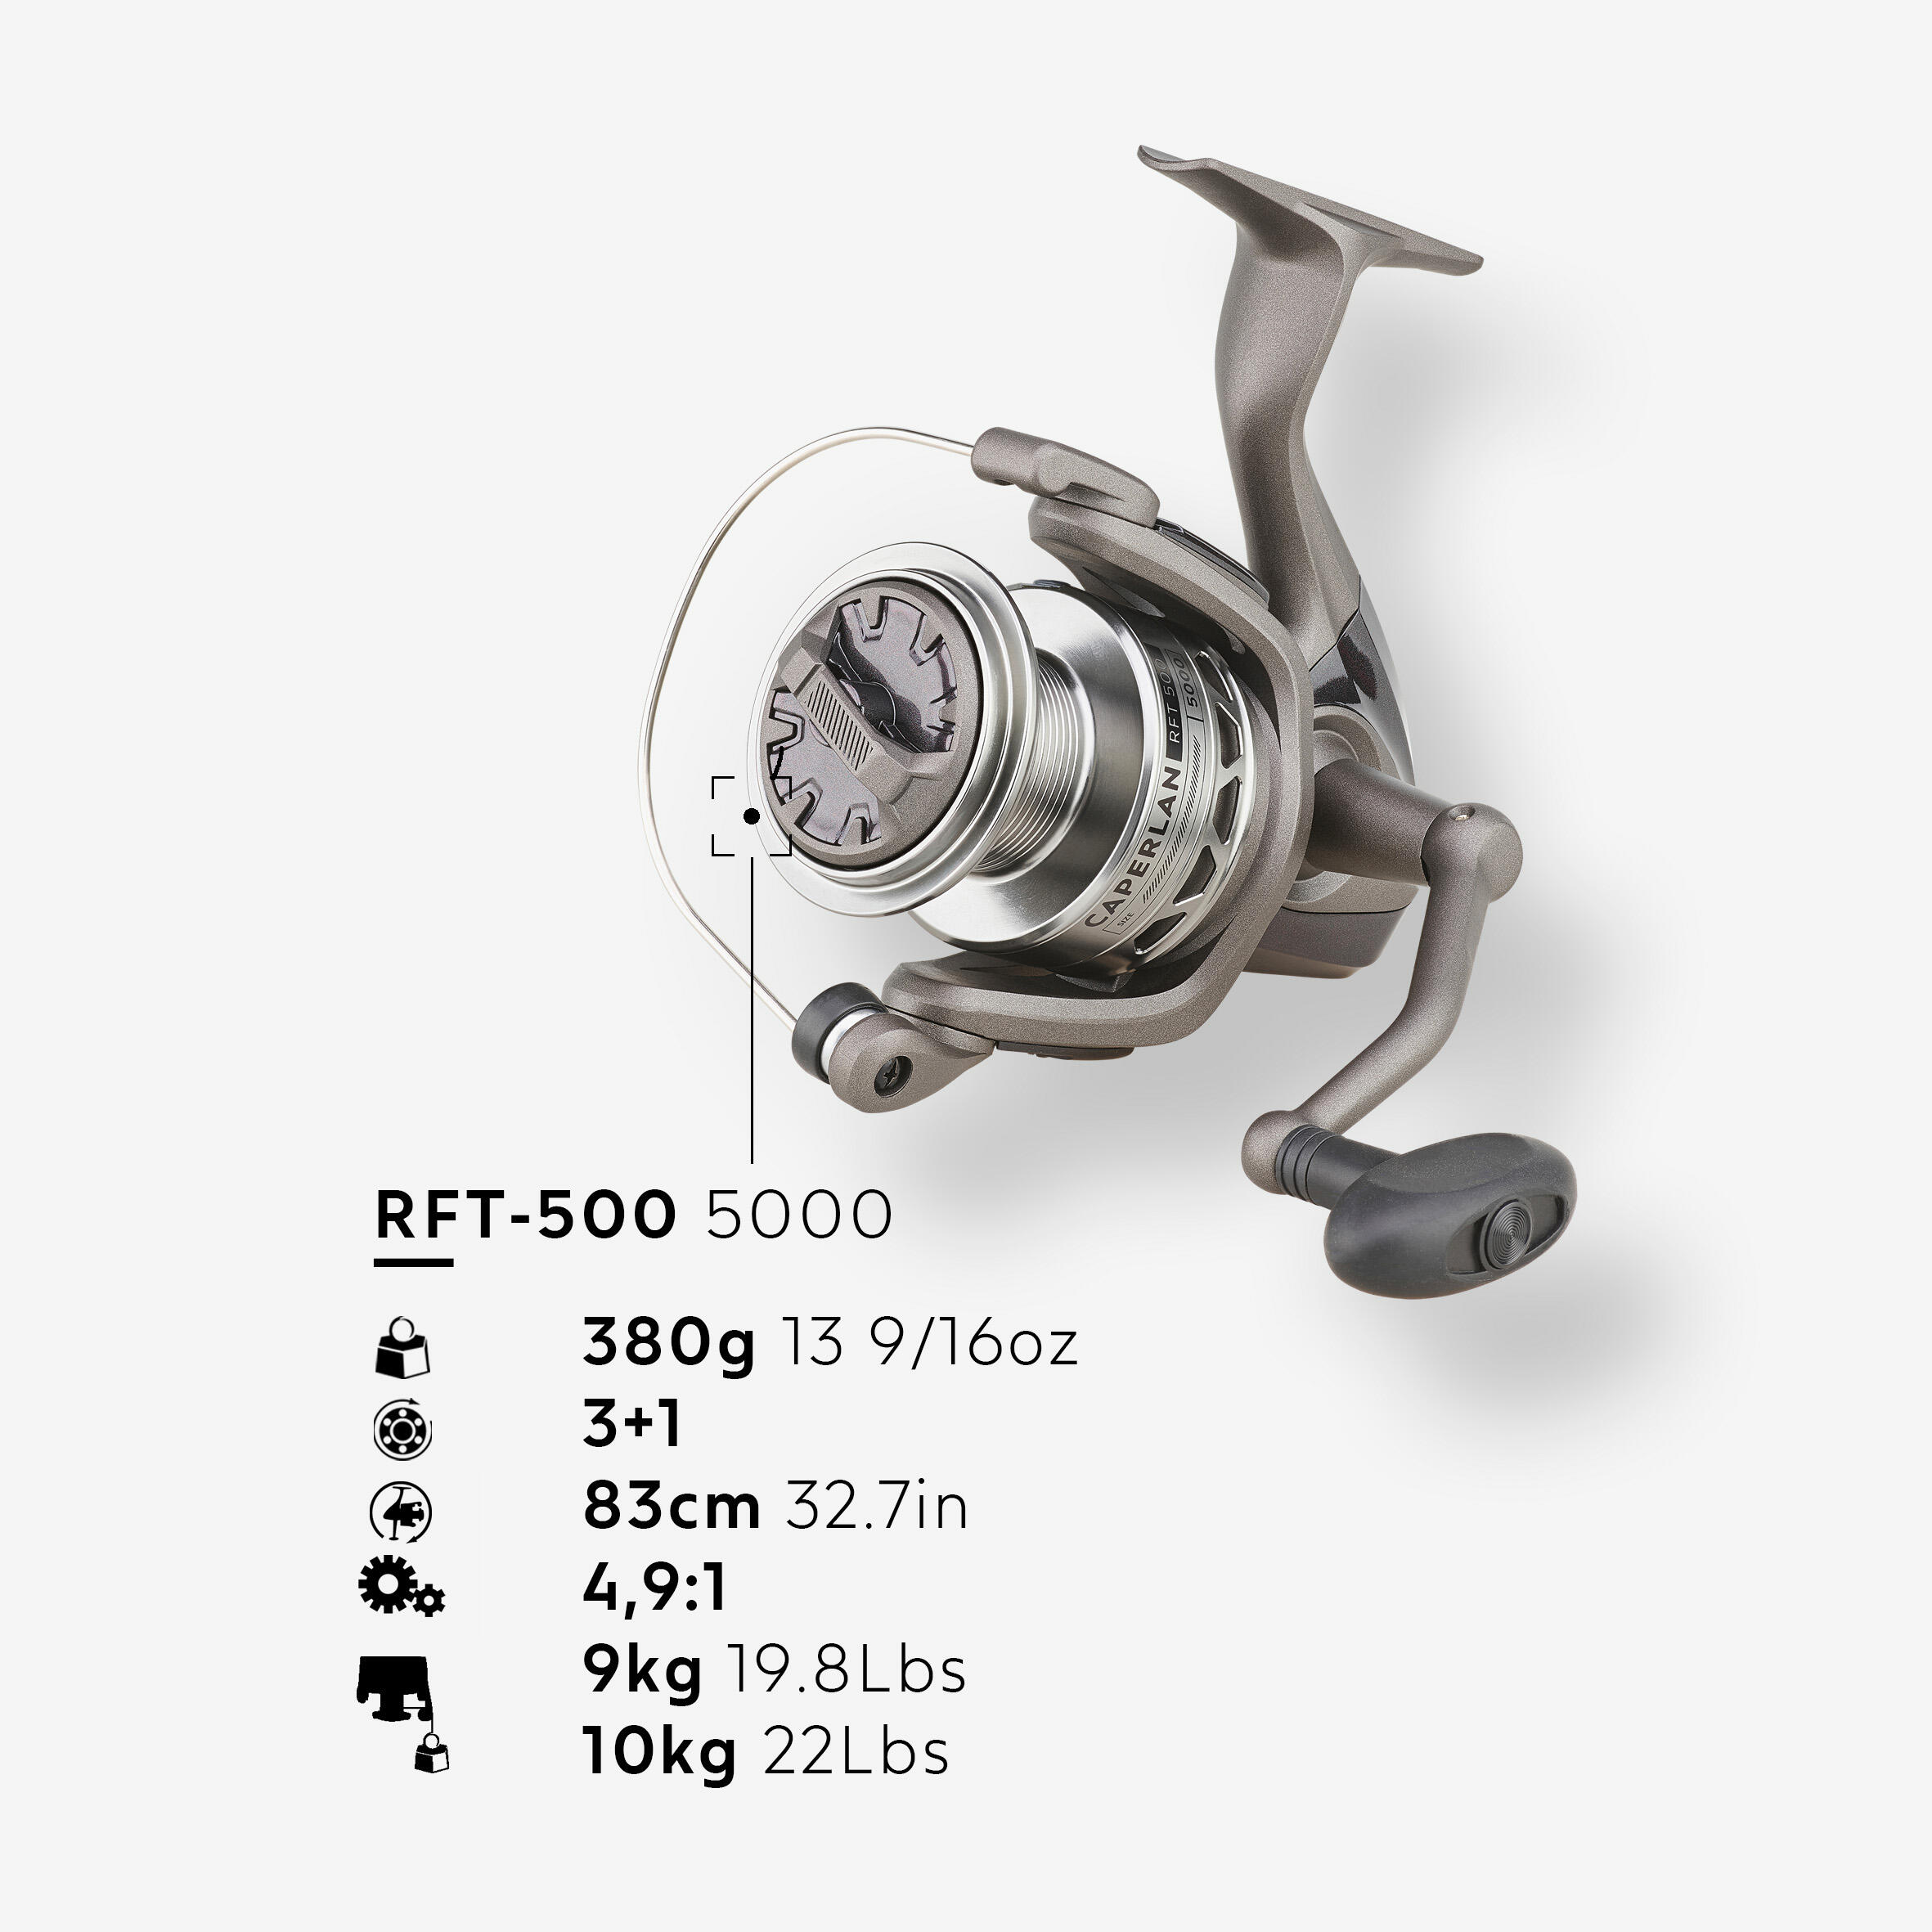 Fishing reel - RFT 500 5000 2/6